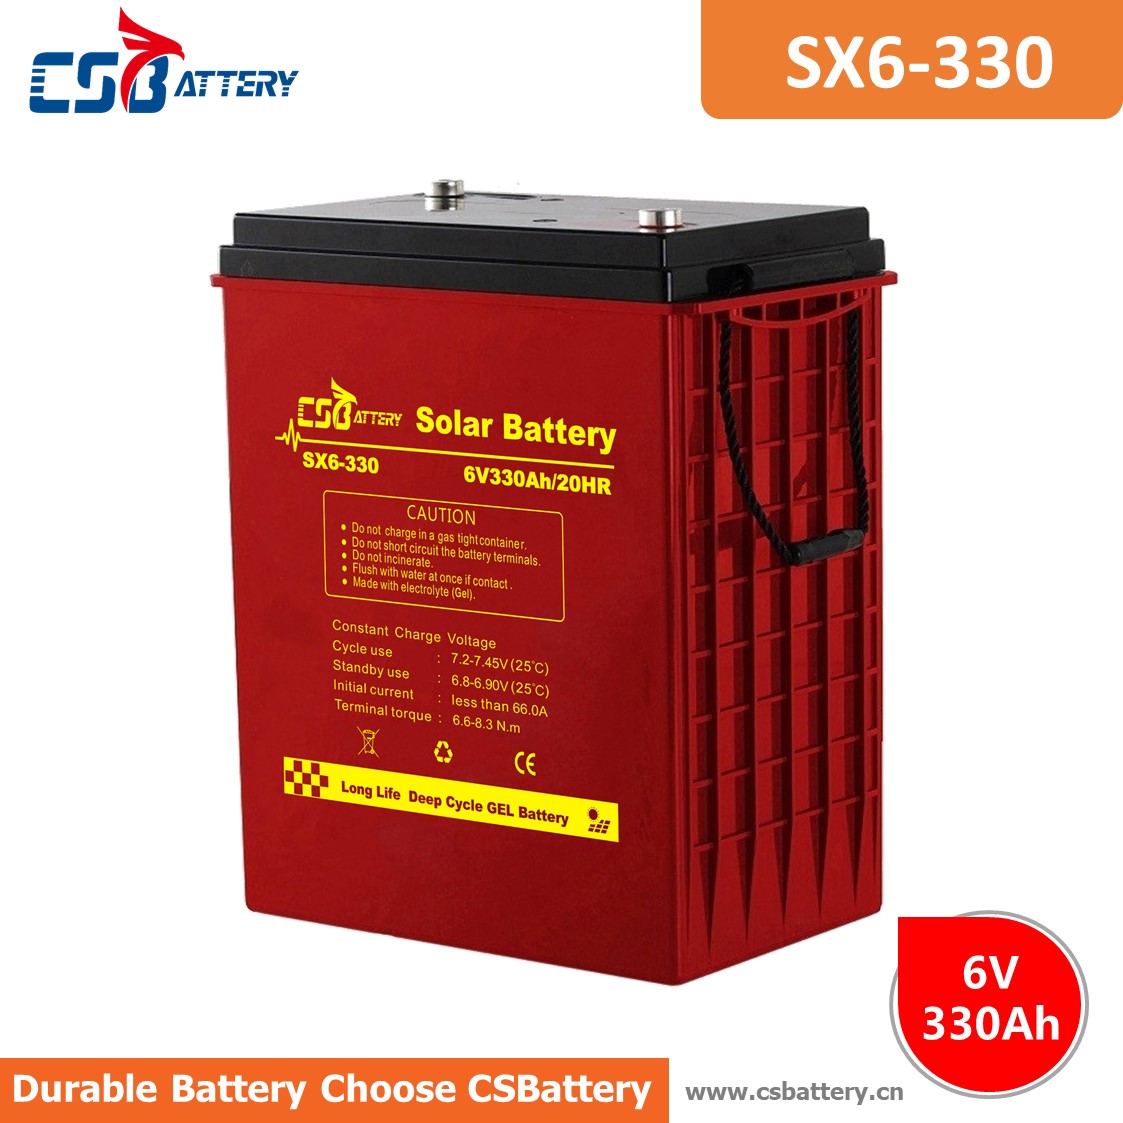 SX6-330 6V 330Ah Deep Cycle GEL-Batterie
